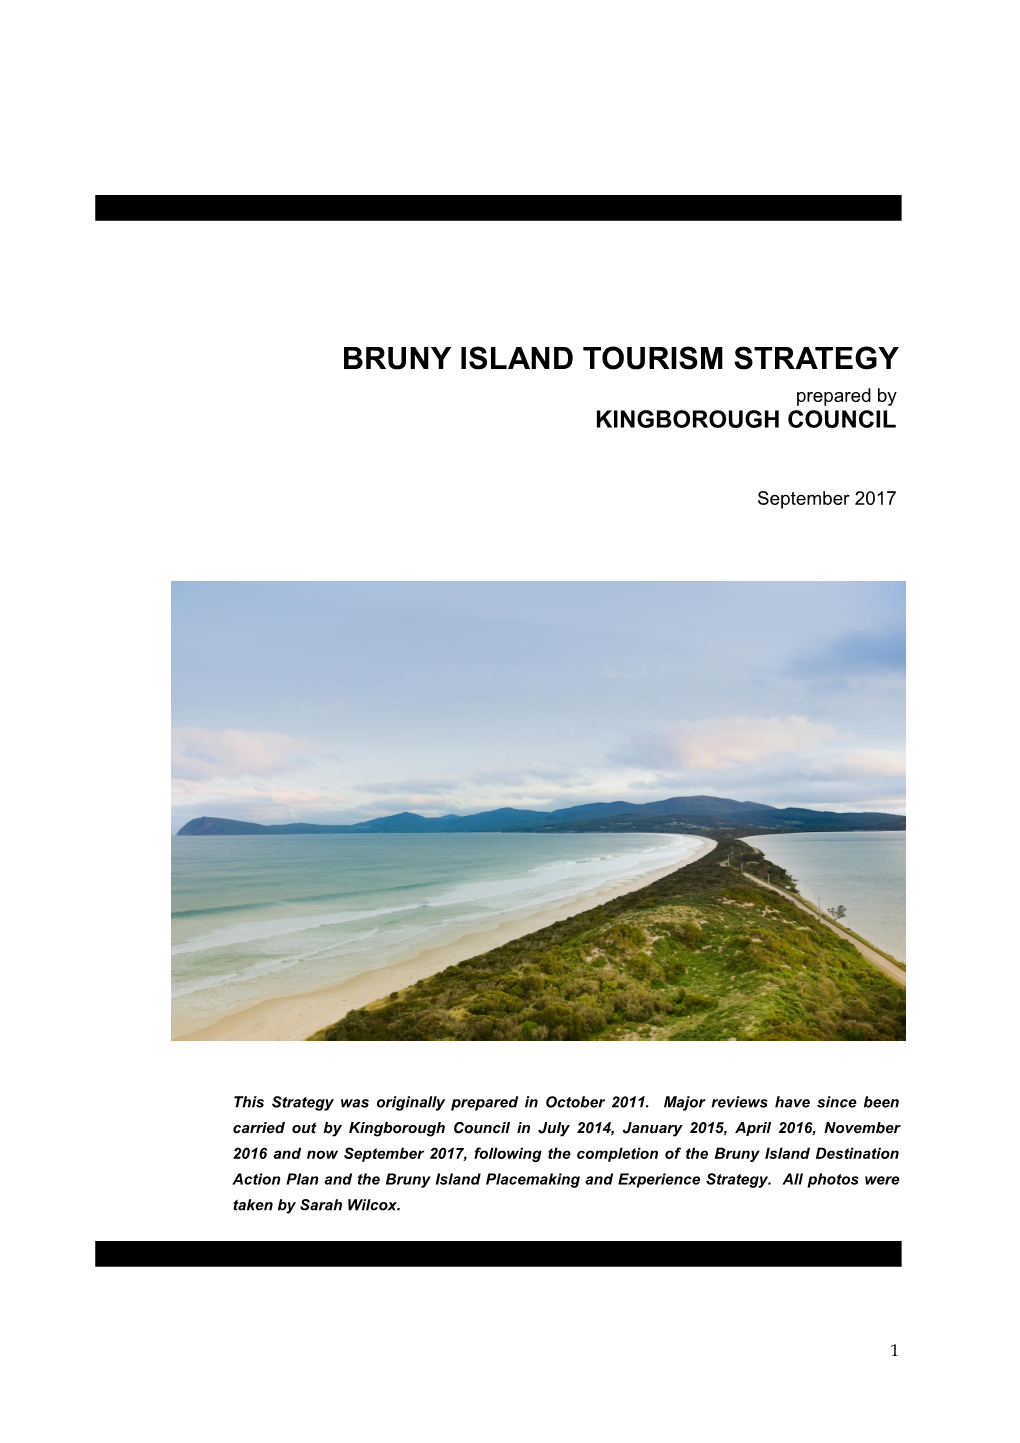 Bruny Tourism Strategy, 2017